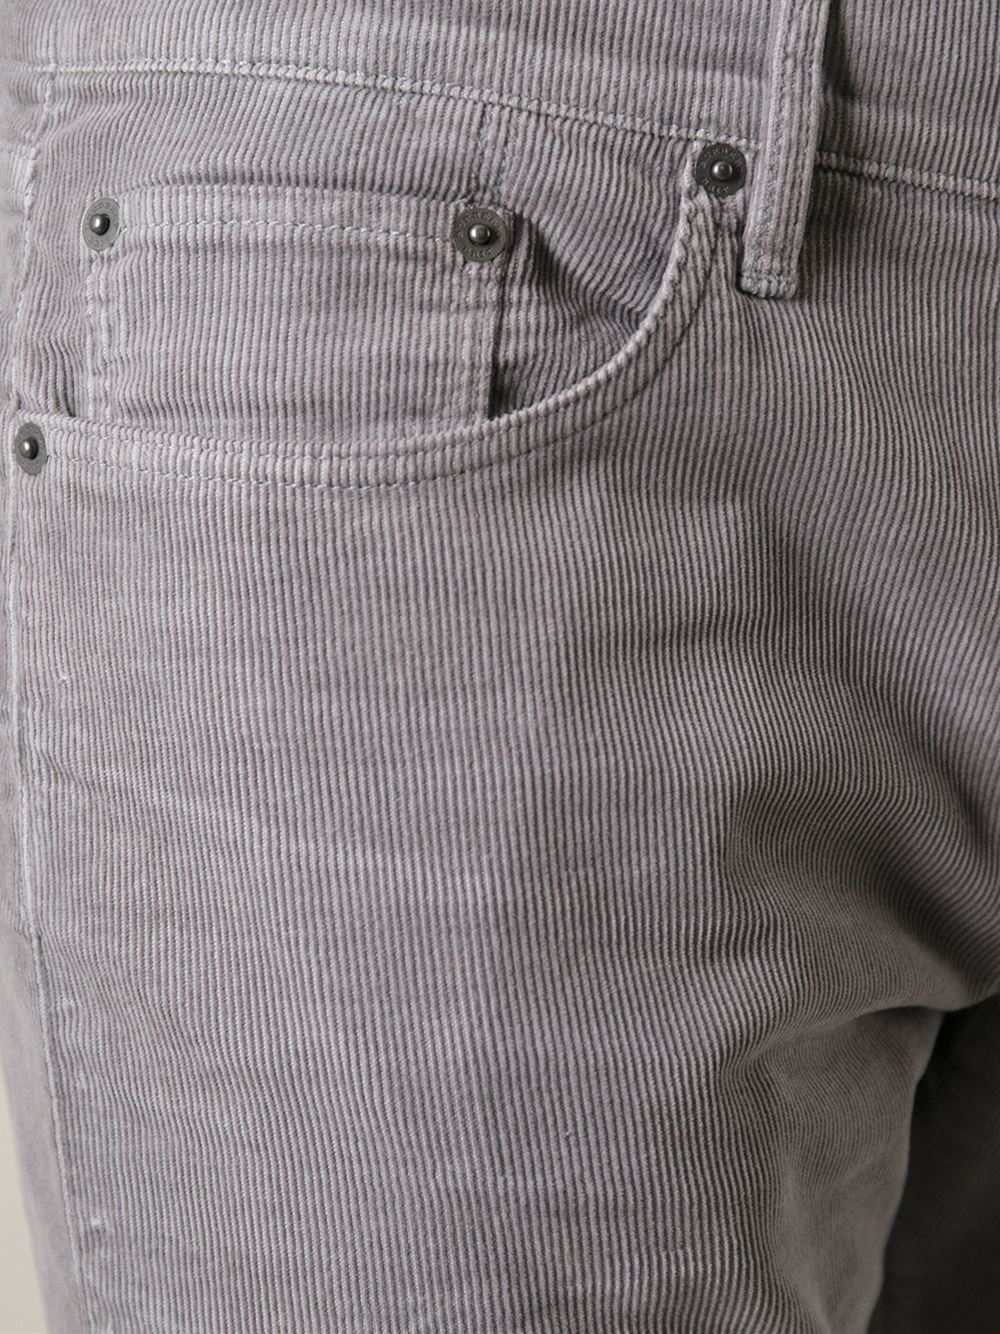 mens grey corduroy pants